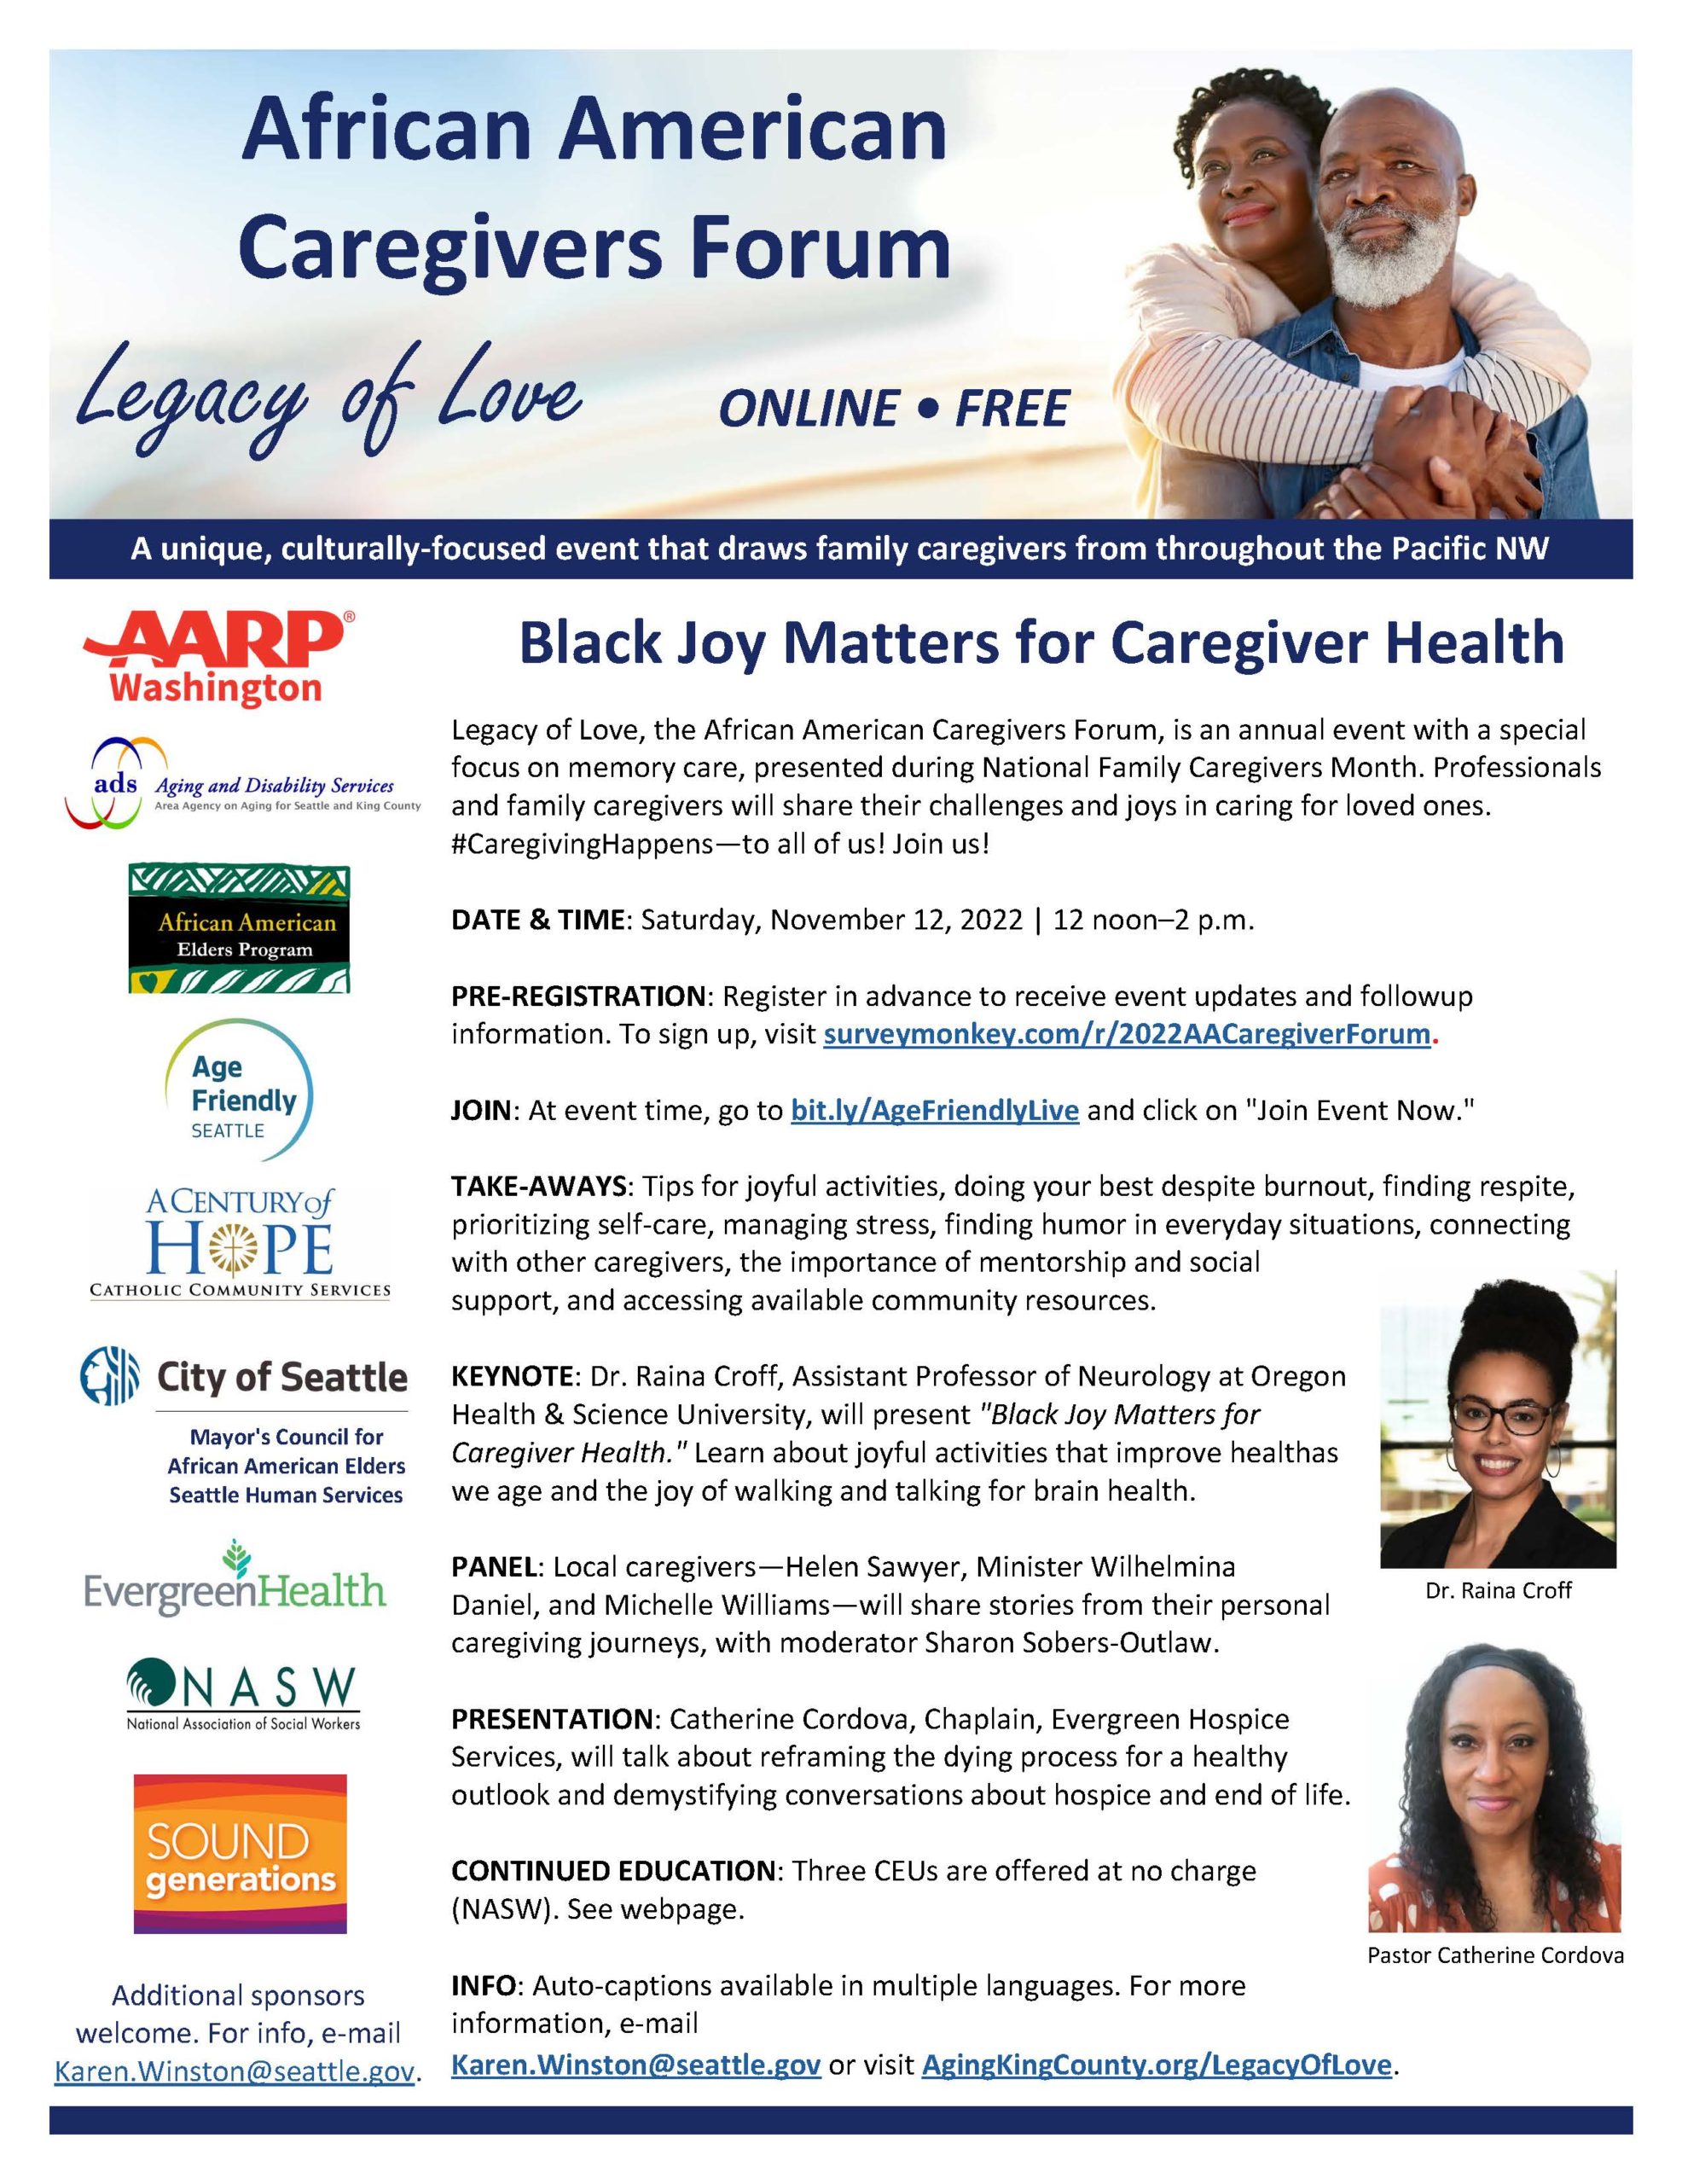 African American Caregivers Forum Flyer